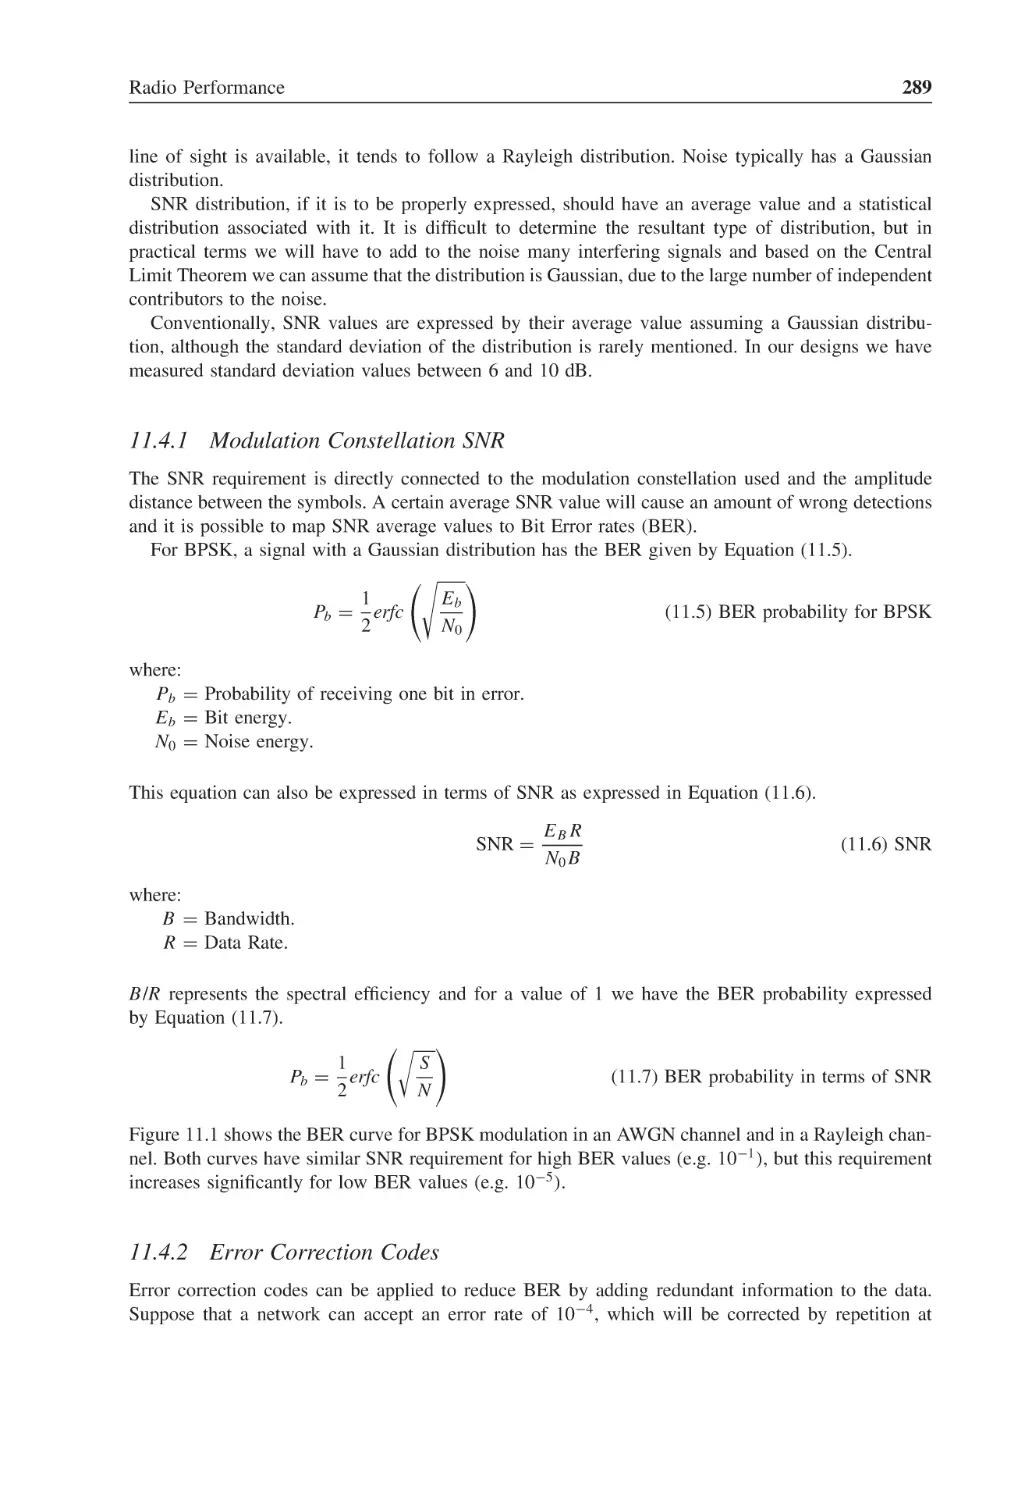 11.4.1 Modulation Constellation SNR
11.4.2 Error Correction Codes